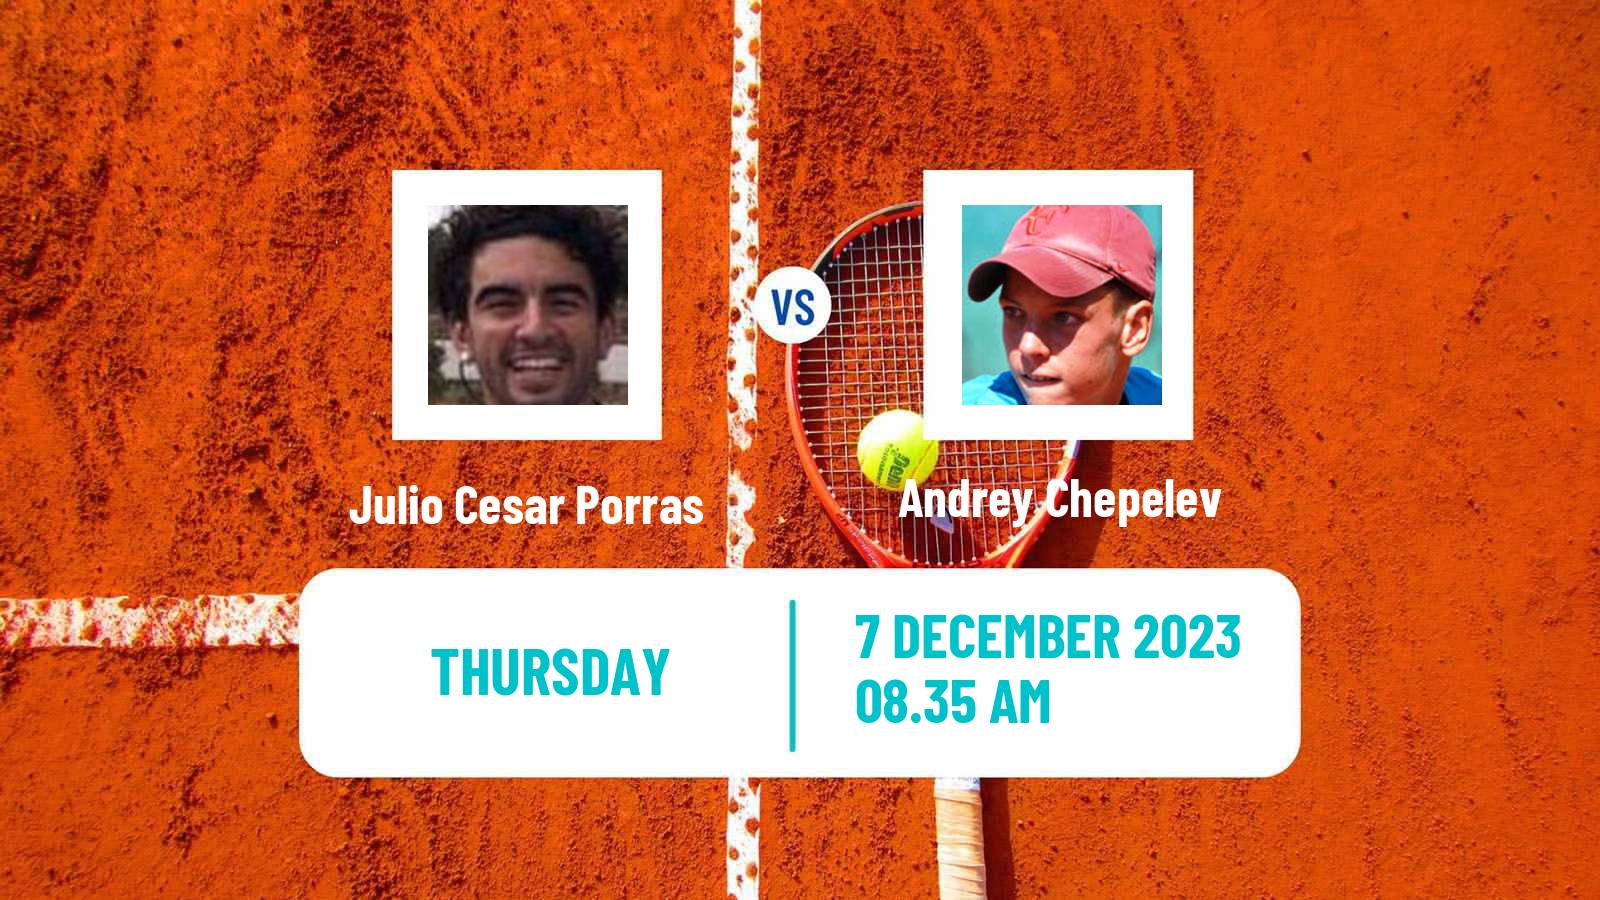 Tennis ITF M15 Madrid 3 Men Julio Cesar Porras - Andrey Chepelev